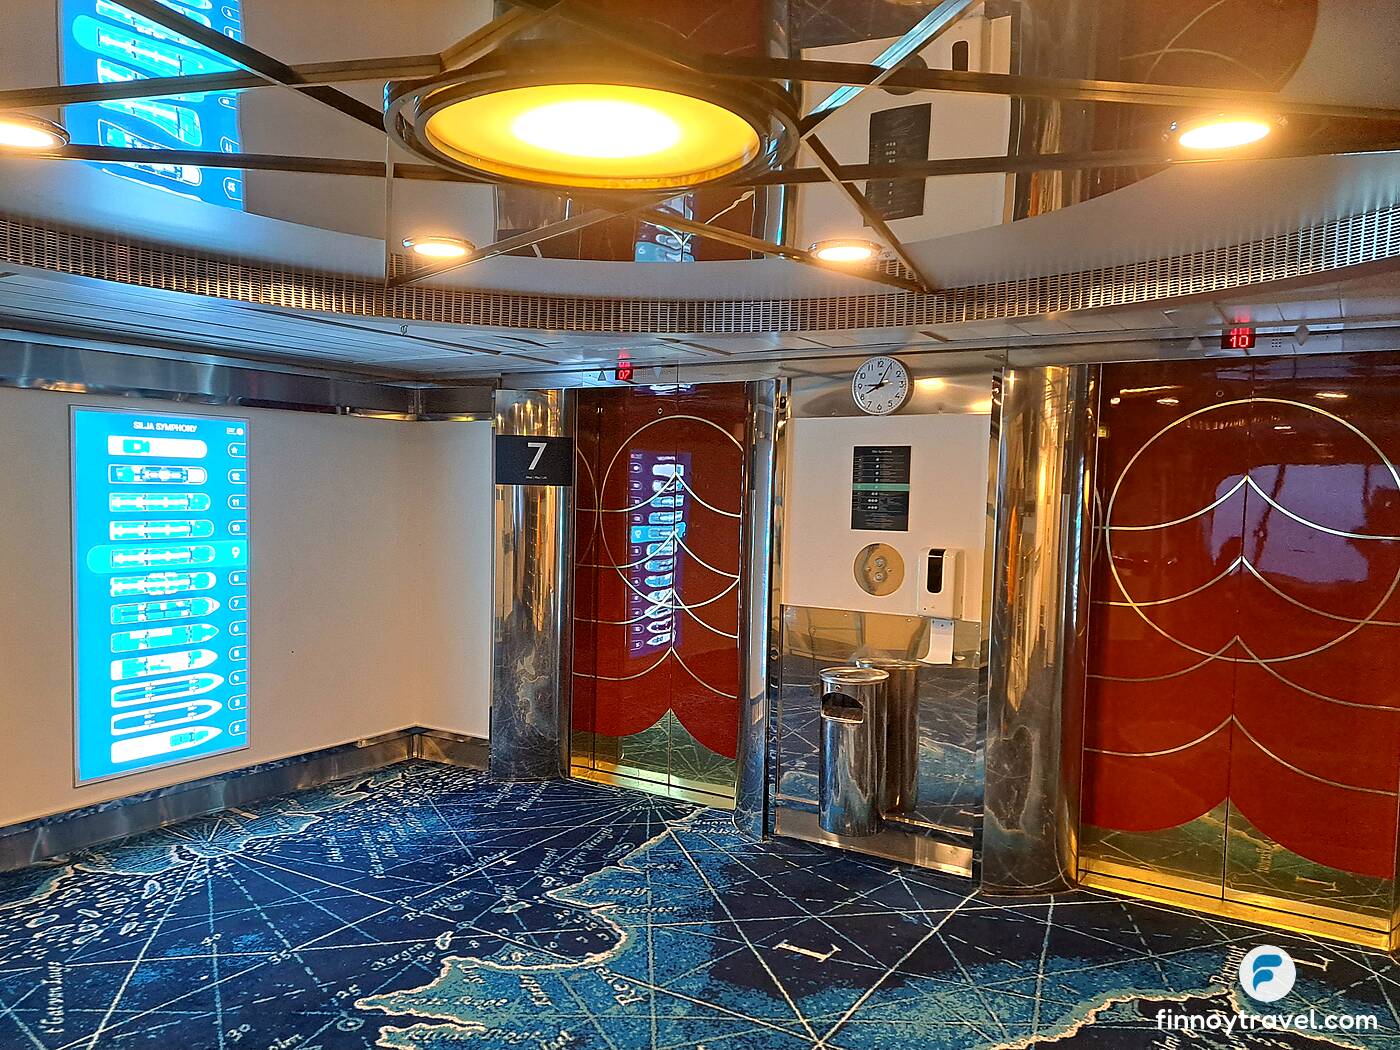 Elevator lobby